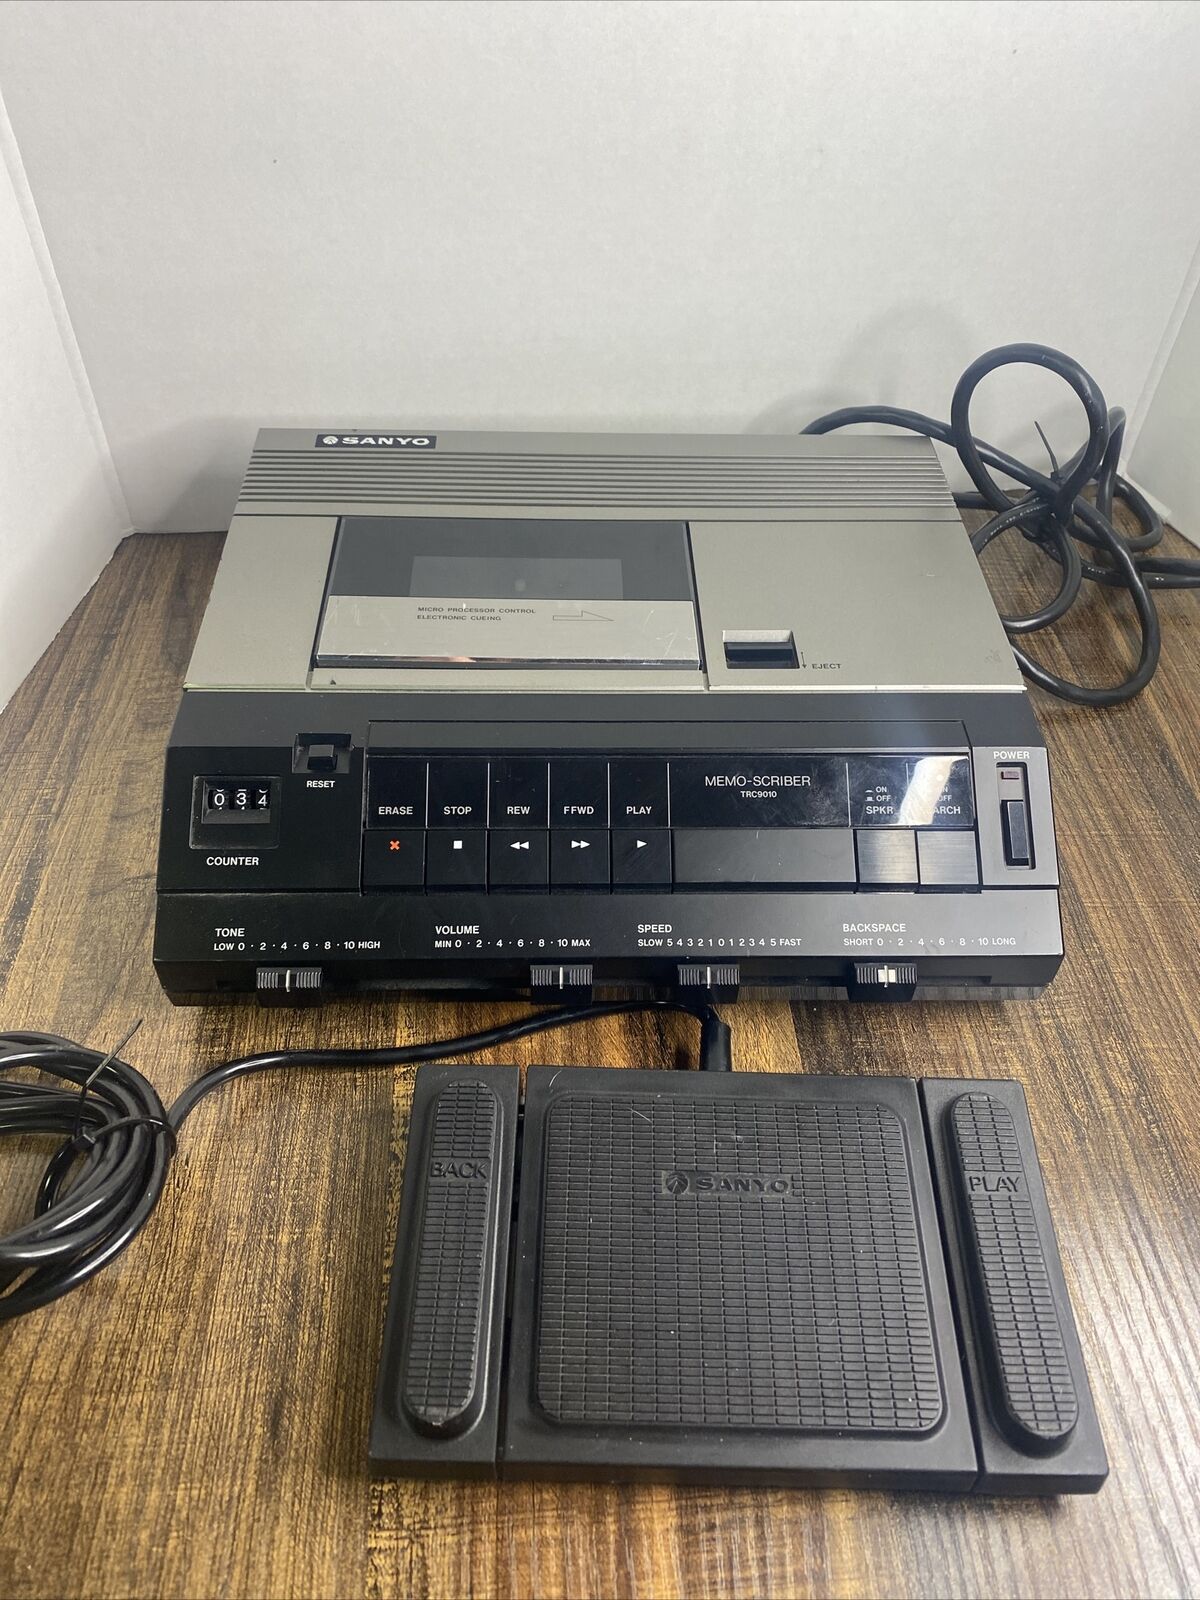 Sanyo Memo Scriber TRC-9010  Vintage Electronics Tested/works